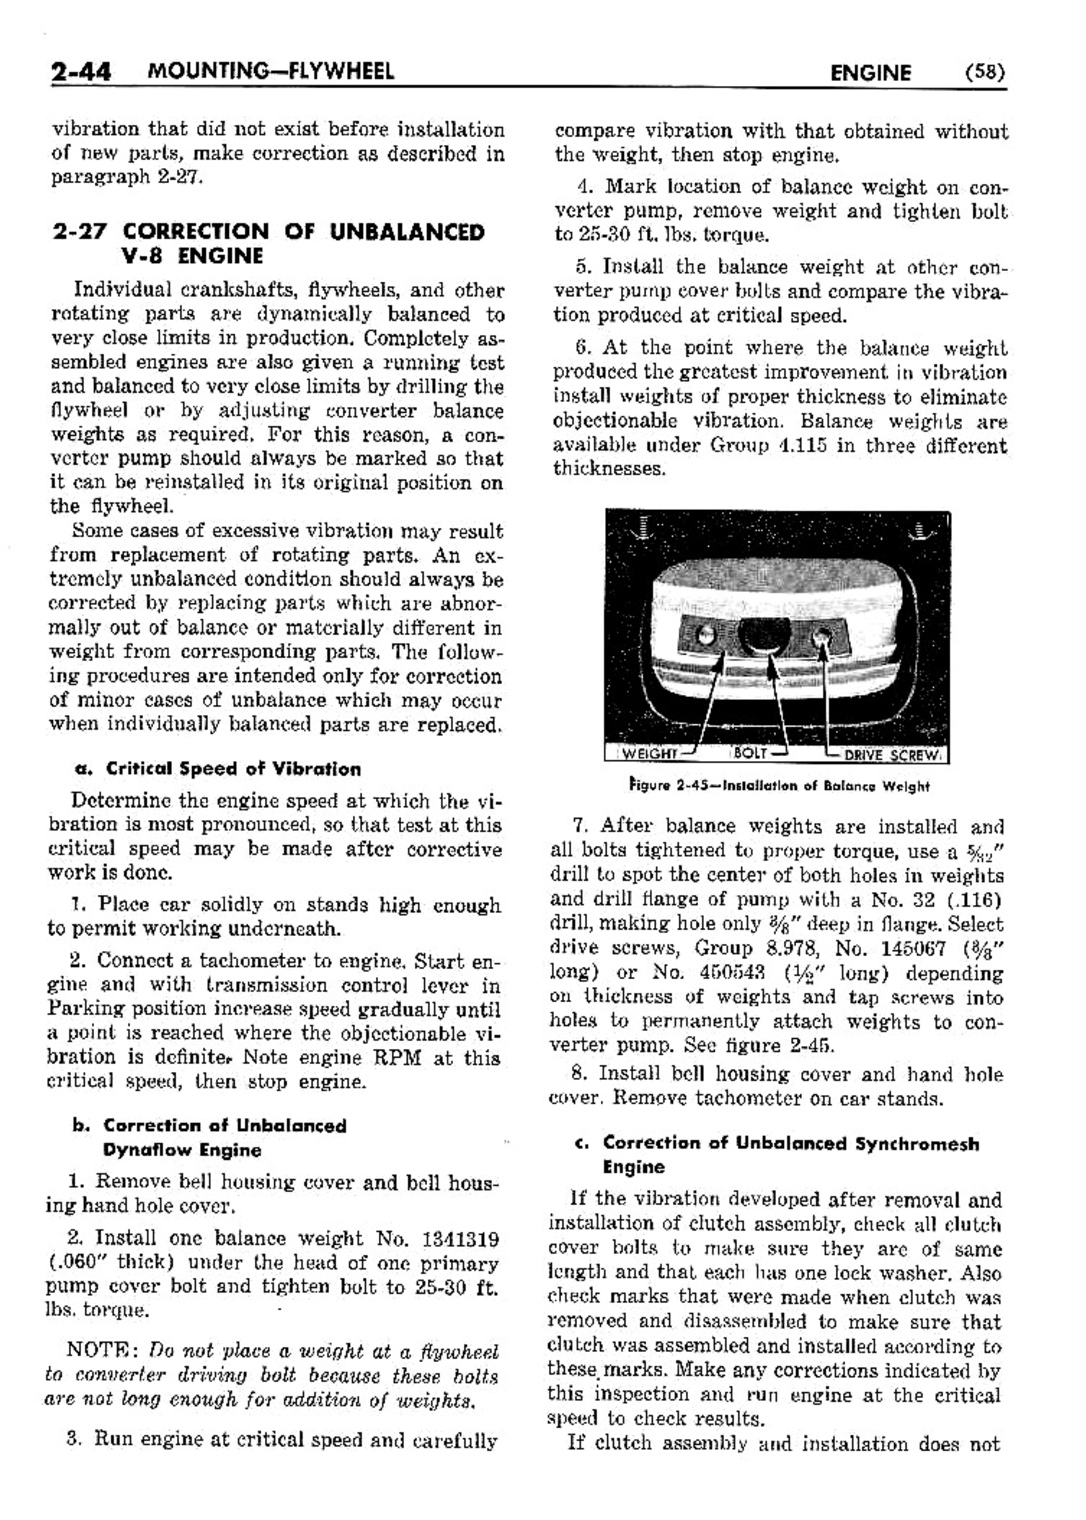 n_03 1953 Buick Shop Manual - Engine-044-044.jpg